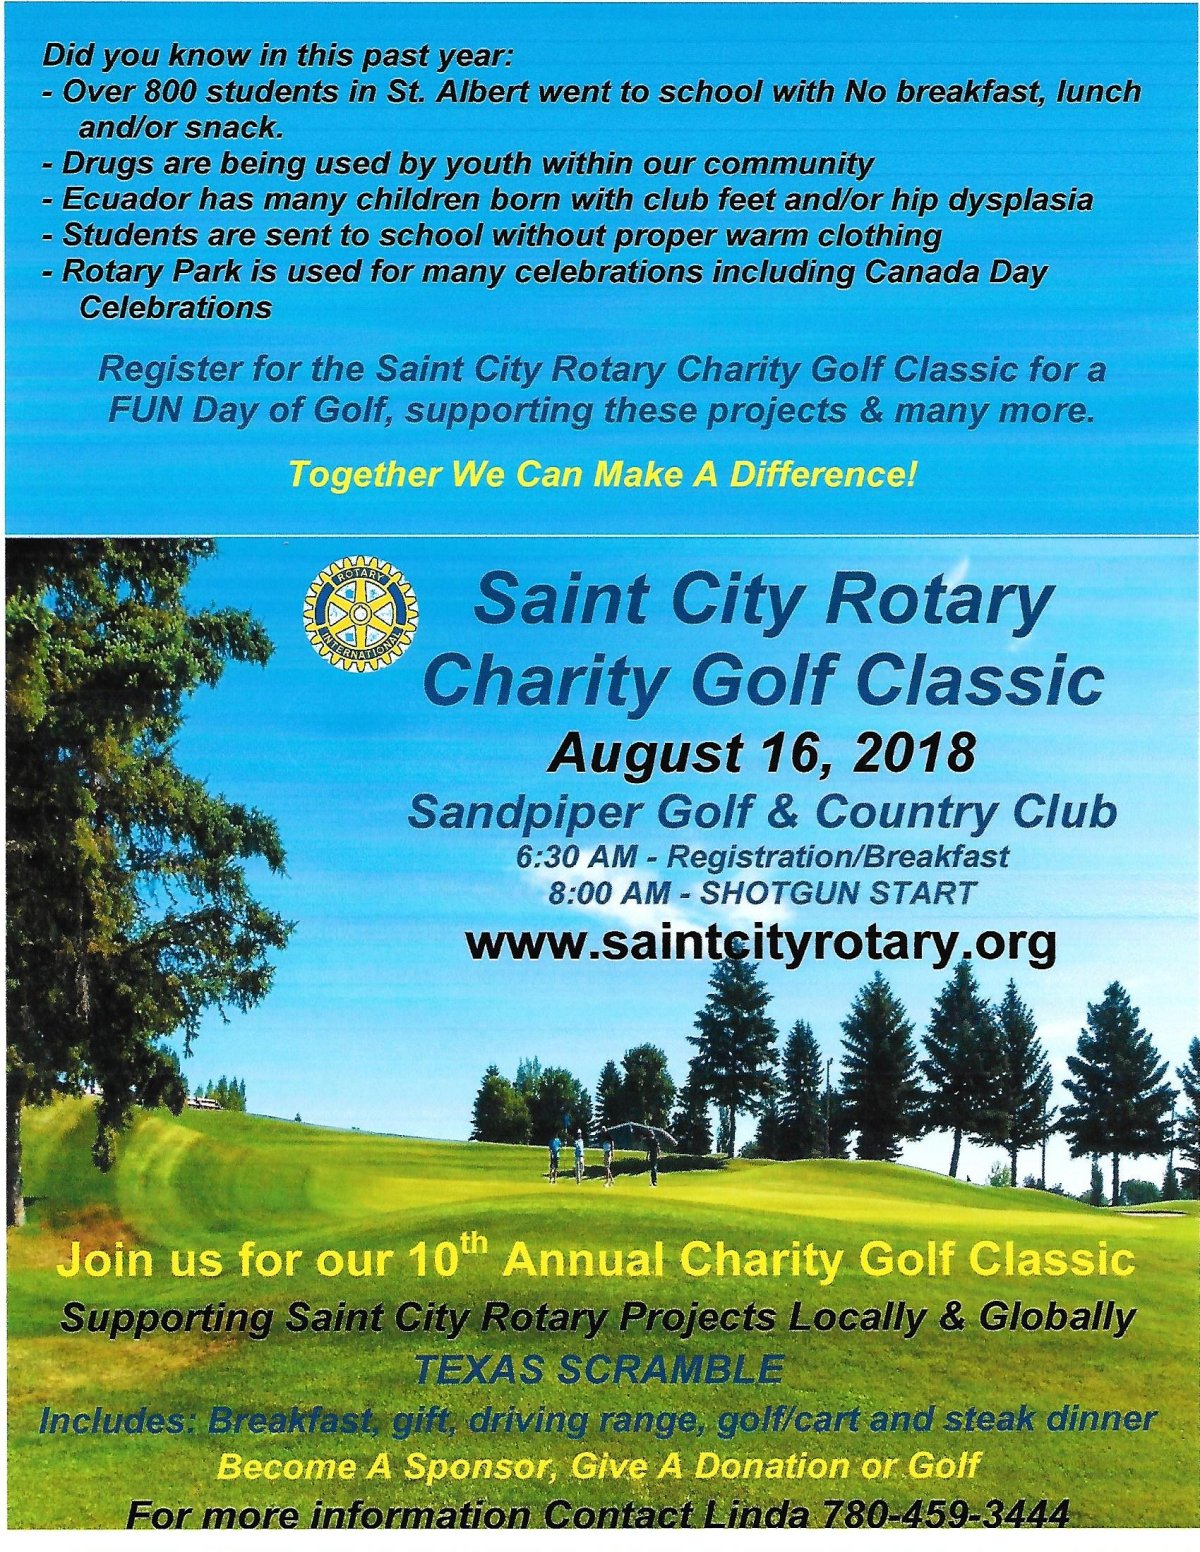 Saint City Rotary Charity Golf Classic - image